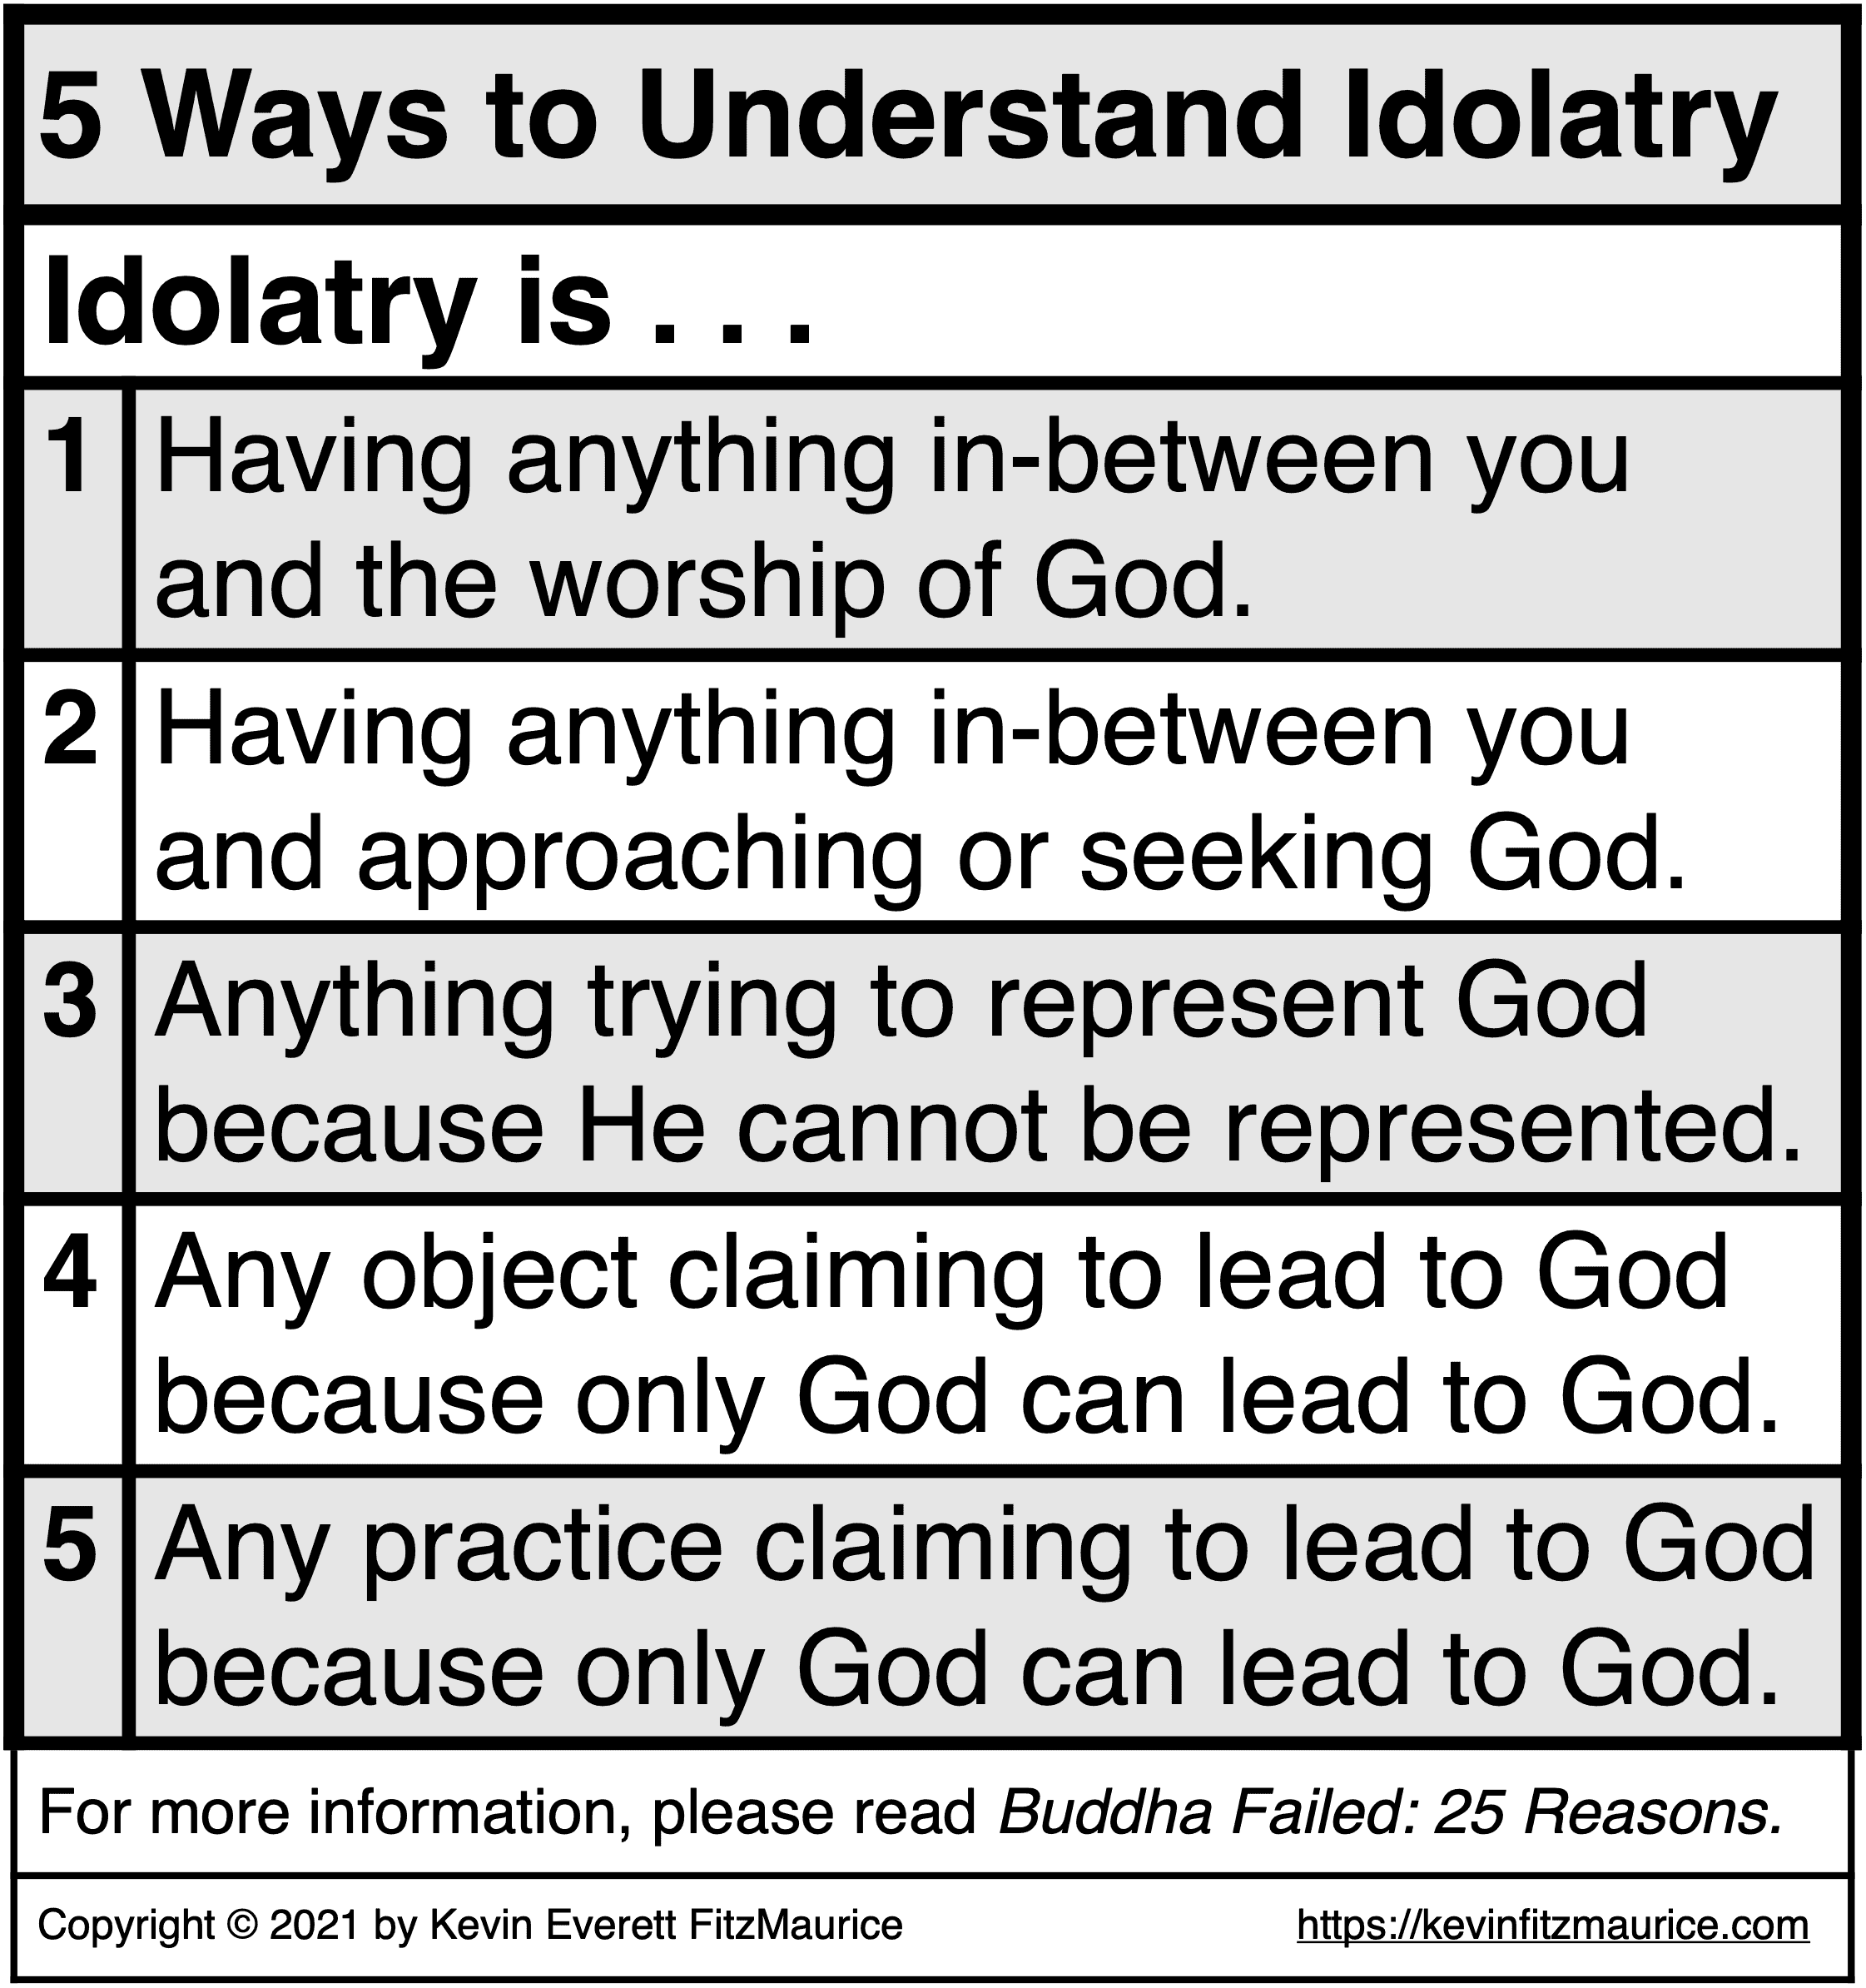 Fast-Facts Christian Idols 5 Ways to Understand Idols